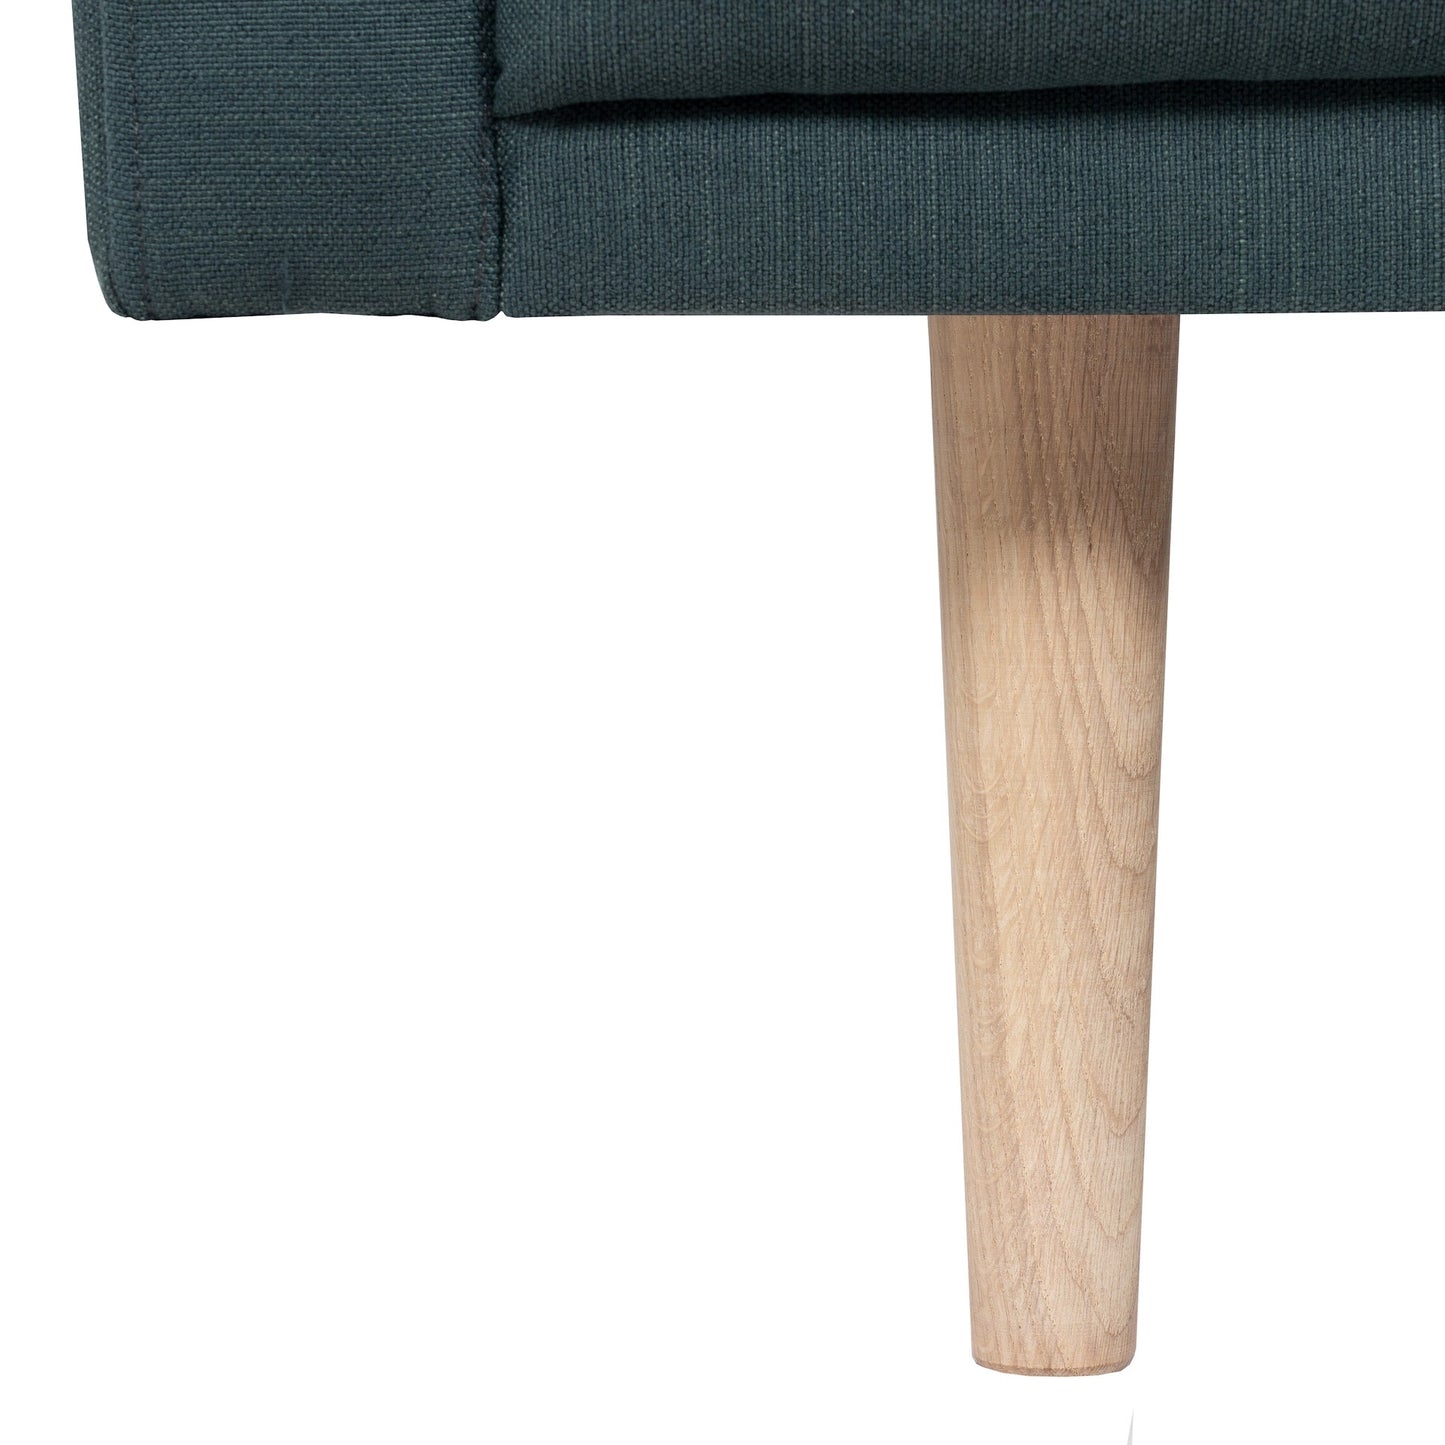 Furniture To Go Larvik Chaiselongue Sofa (RH) - Dark Green, Oak Legs